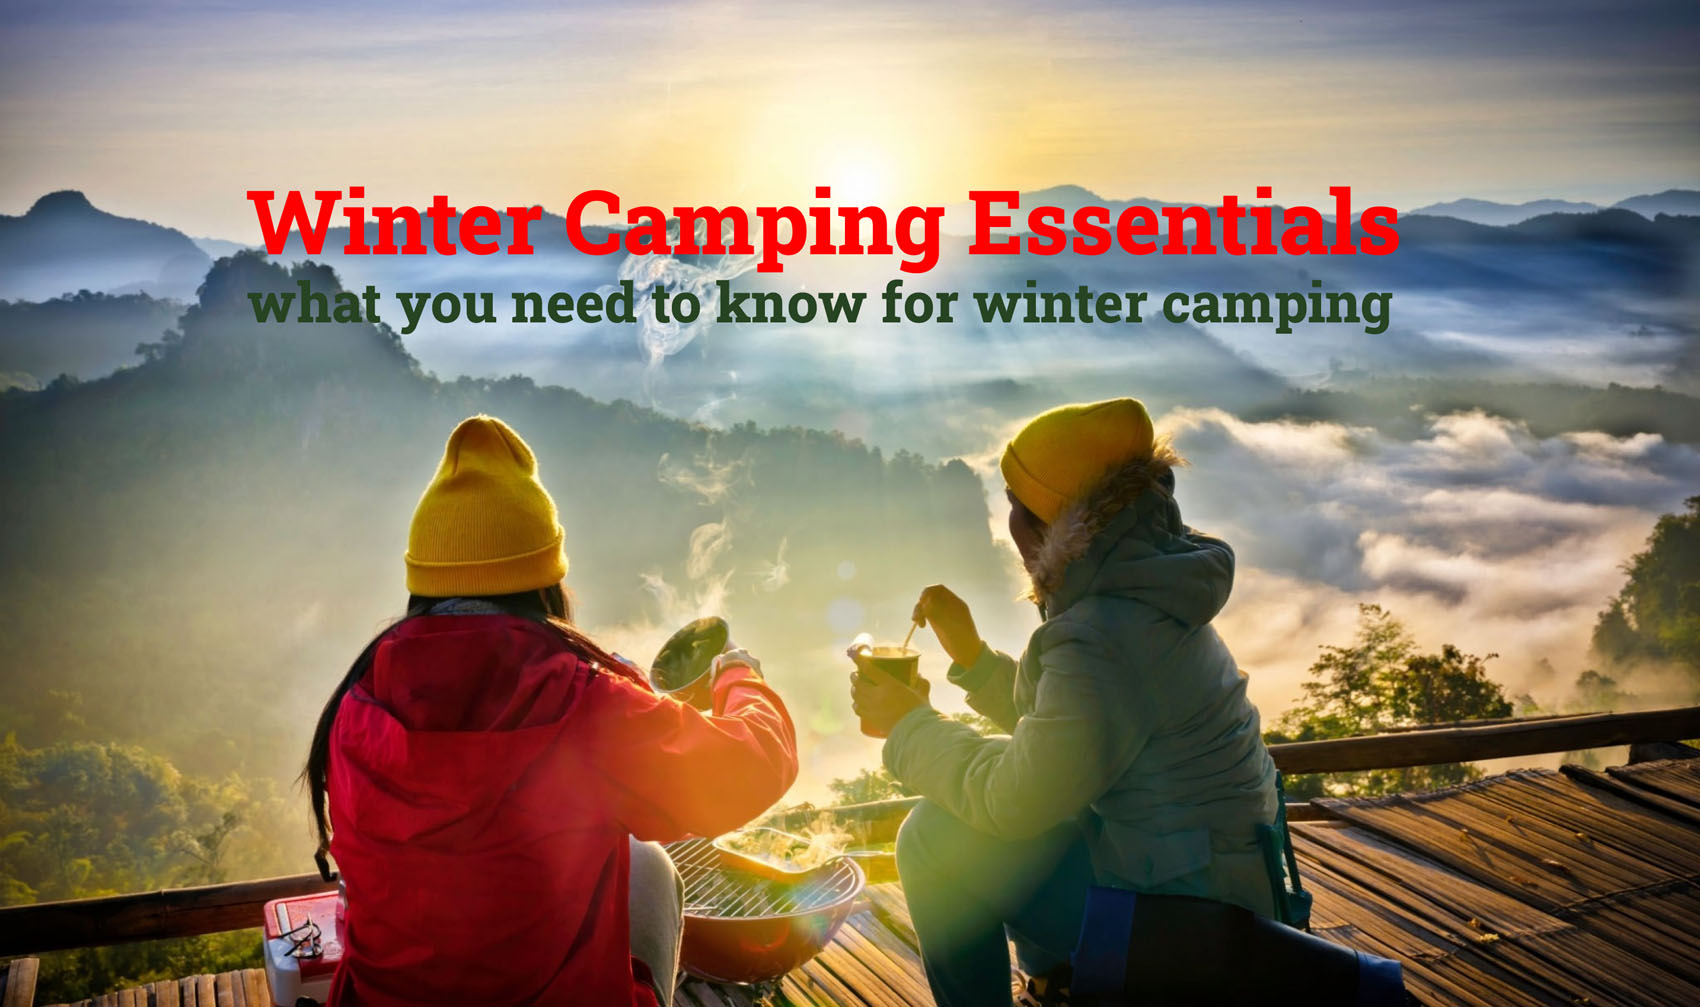 Winter camping essentials